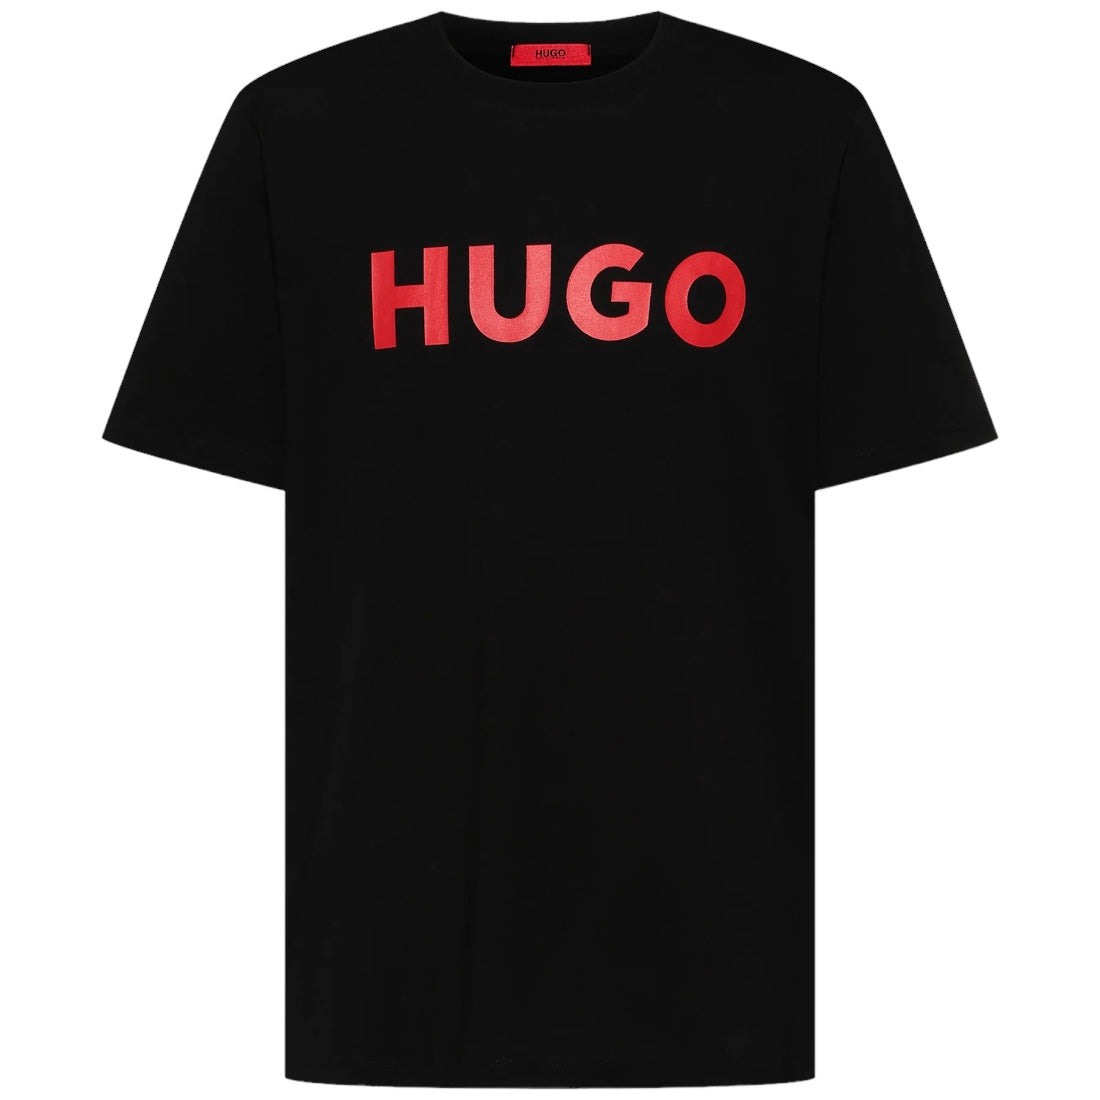 HUGO DULIVIO Big Red Logo T-shirt